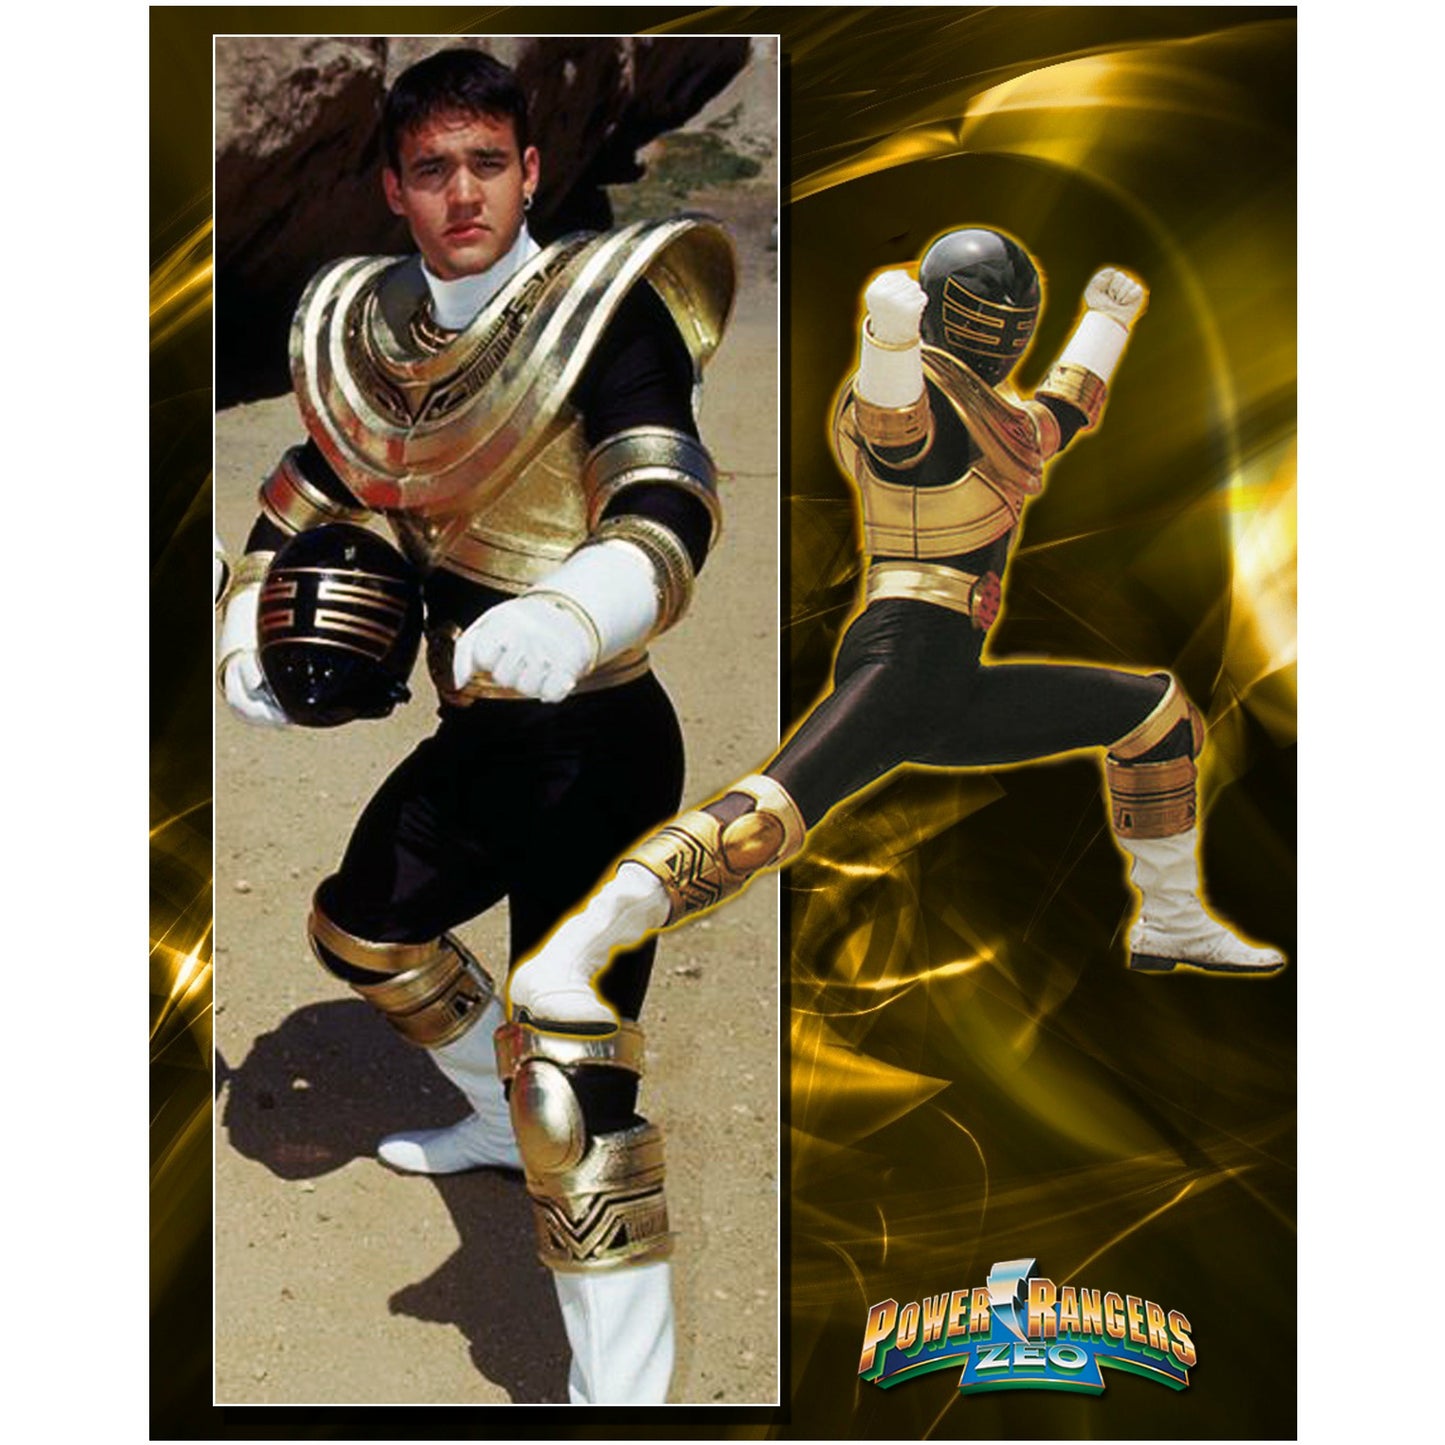 Autographed Gold Ranger Photo Collage | Austin St. John